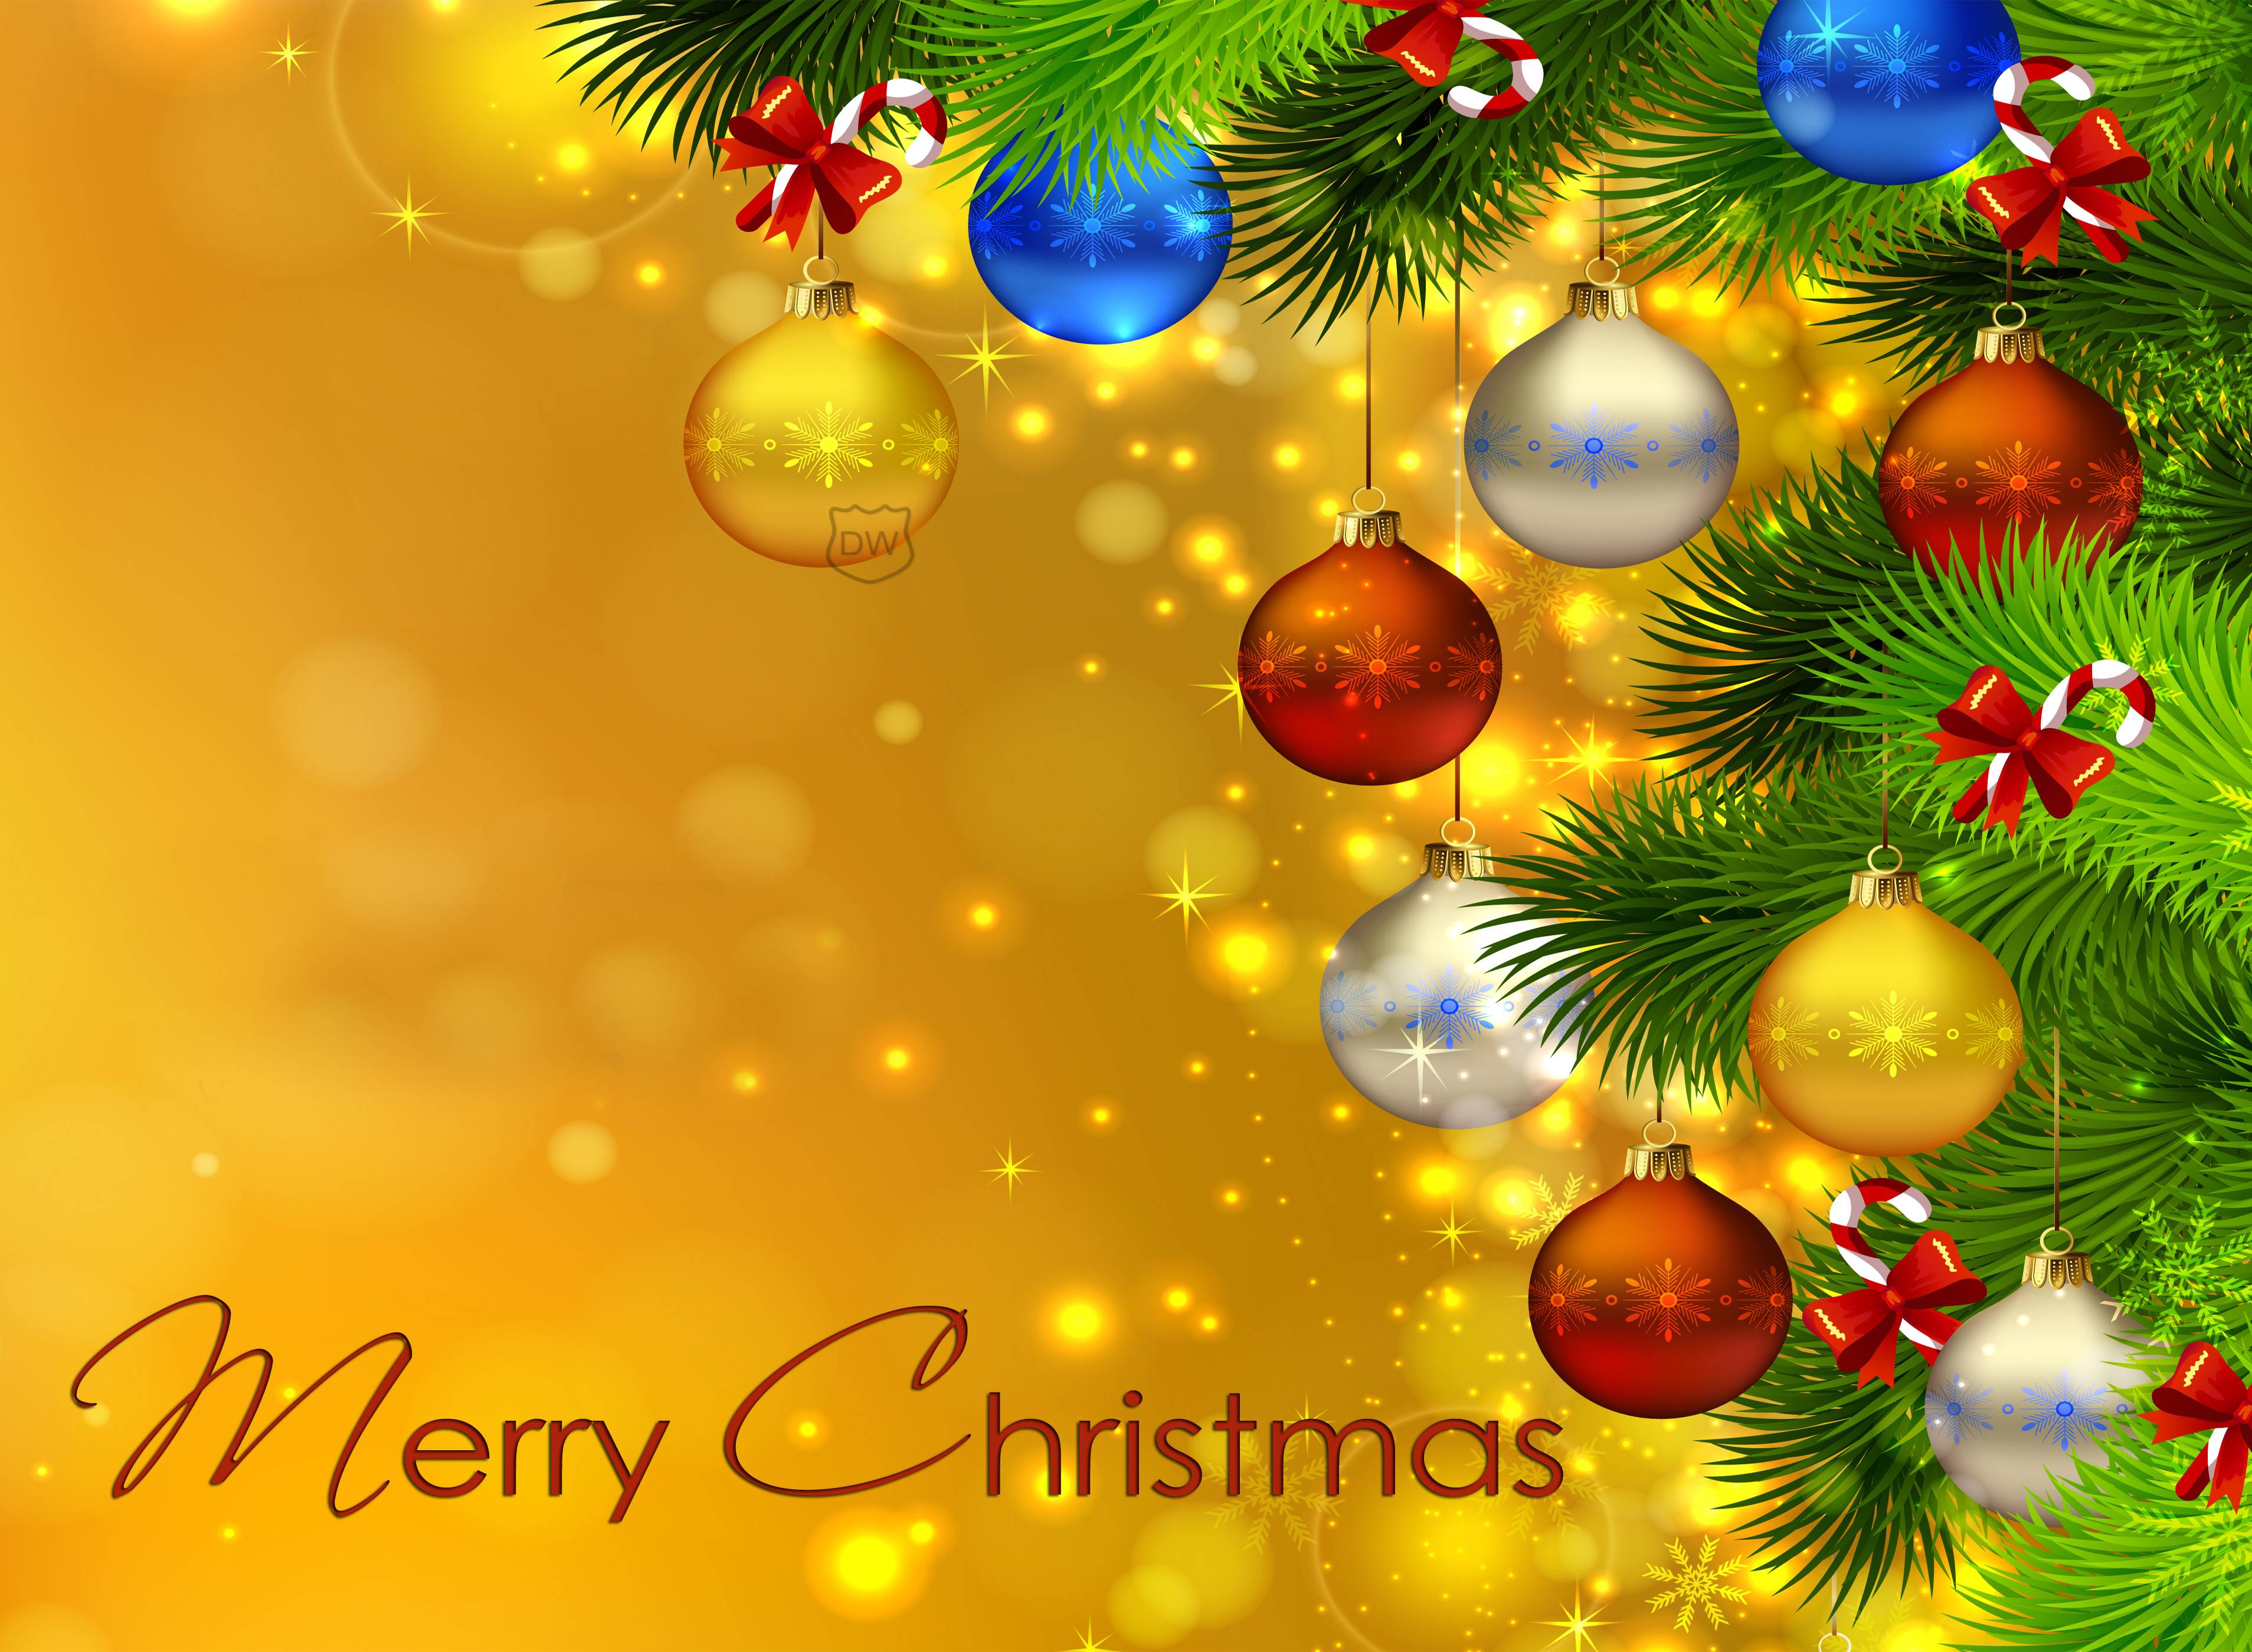 Merry Christmas HD Wallpaper free